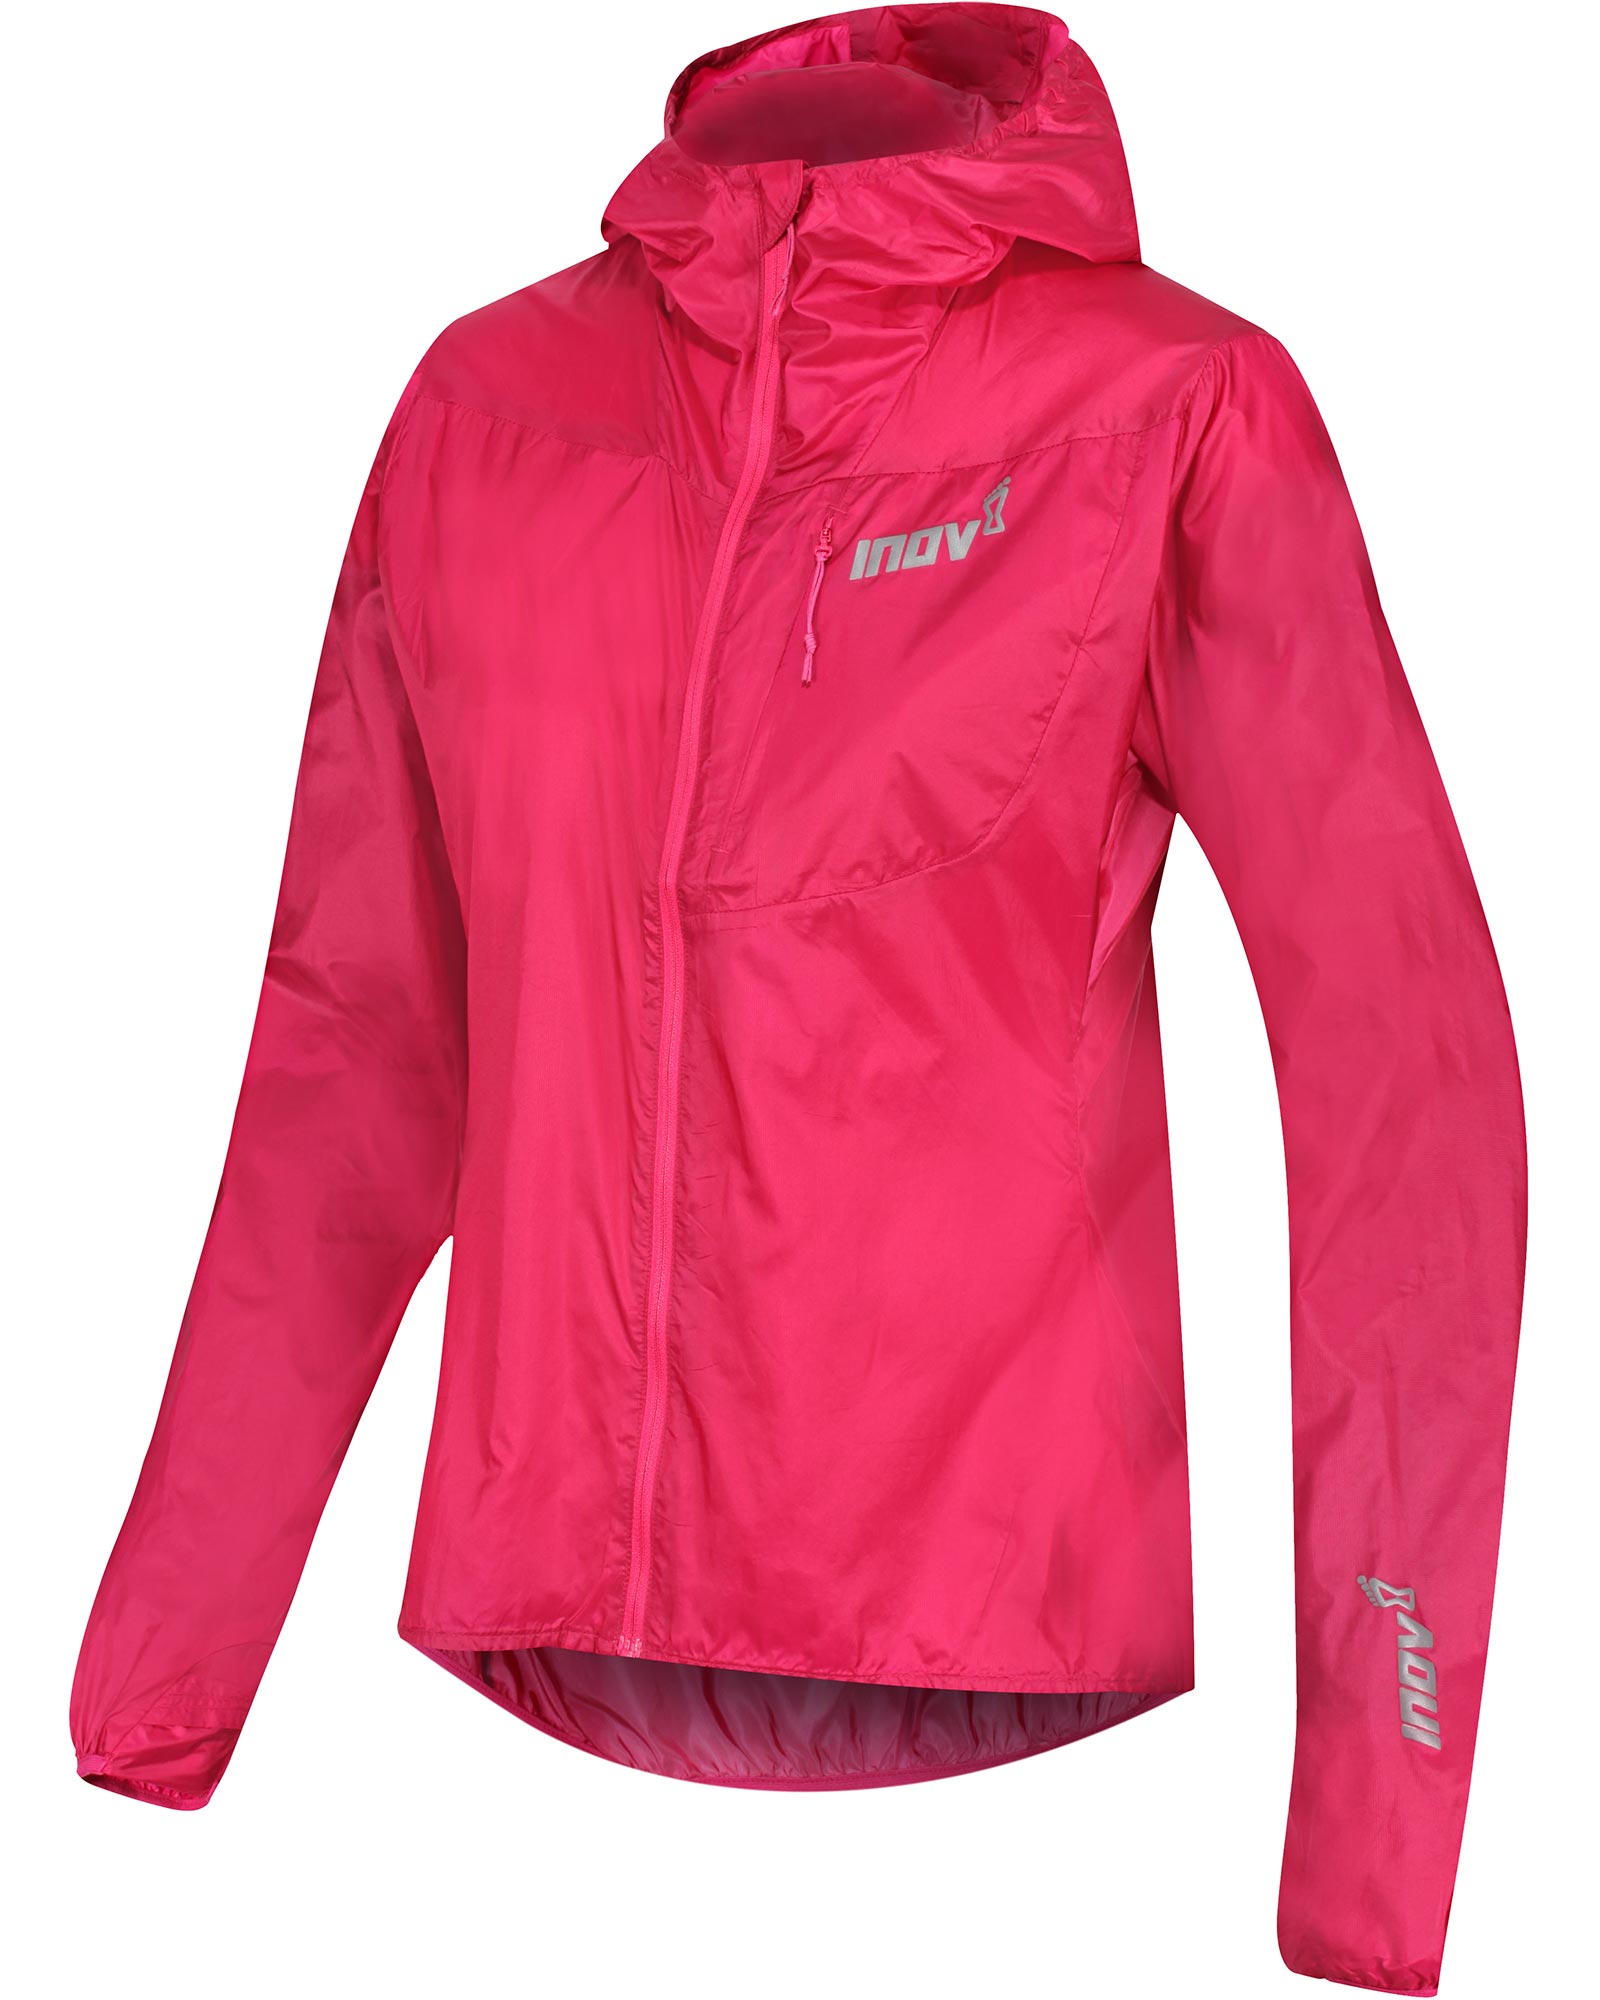 Inov 8 Full Zip Windshell Women’s Jacket - Pink 8